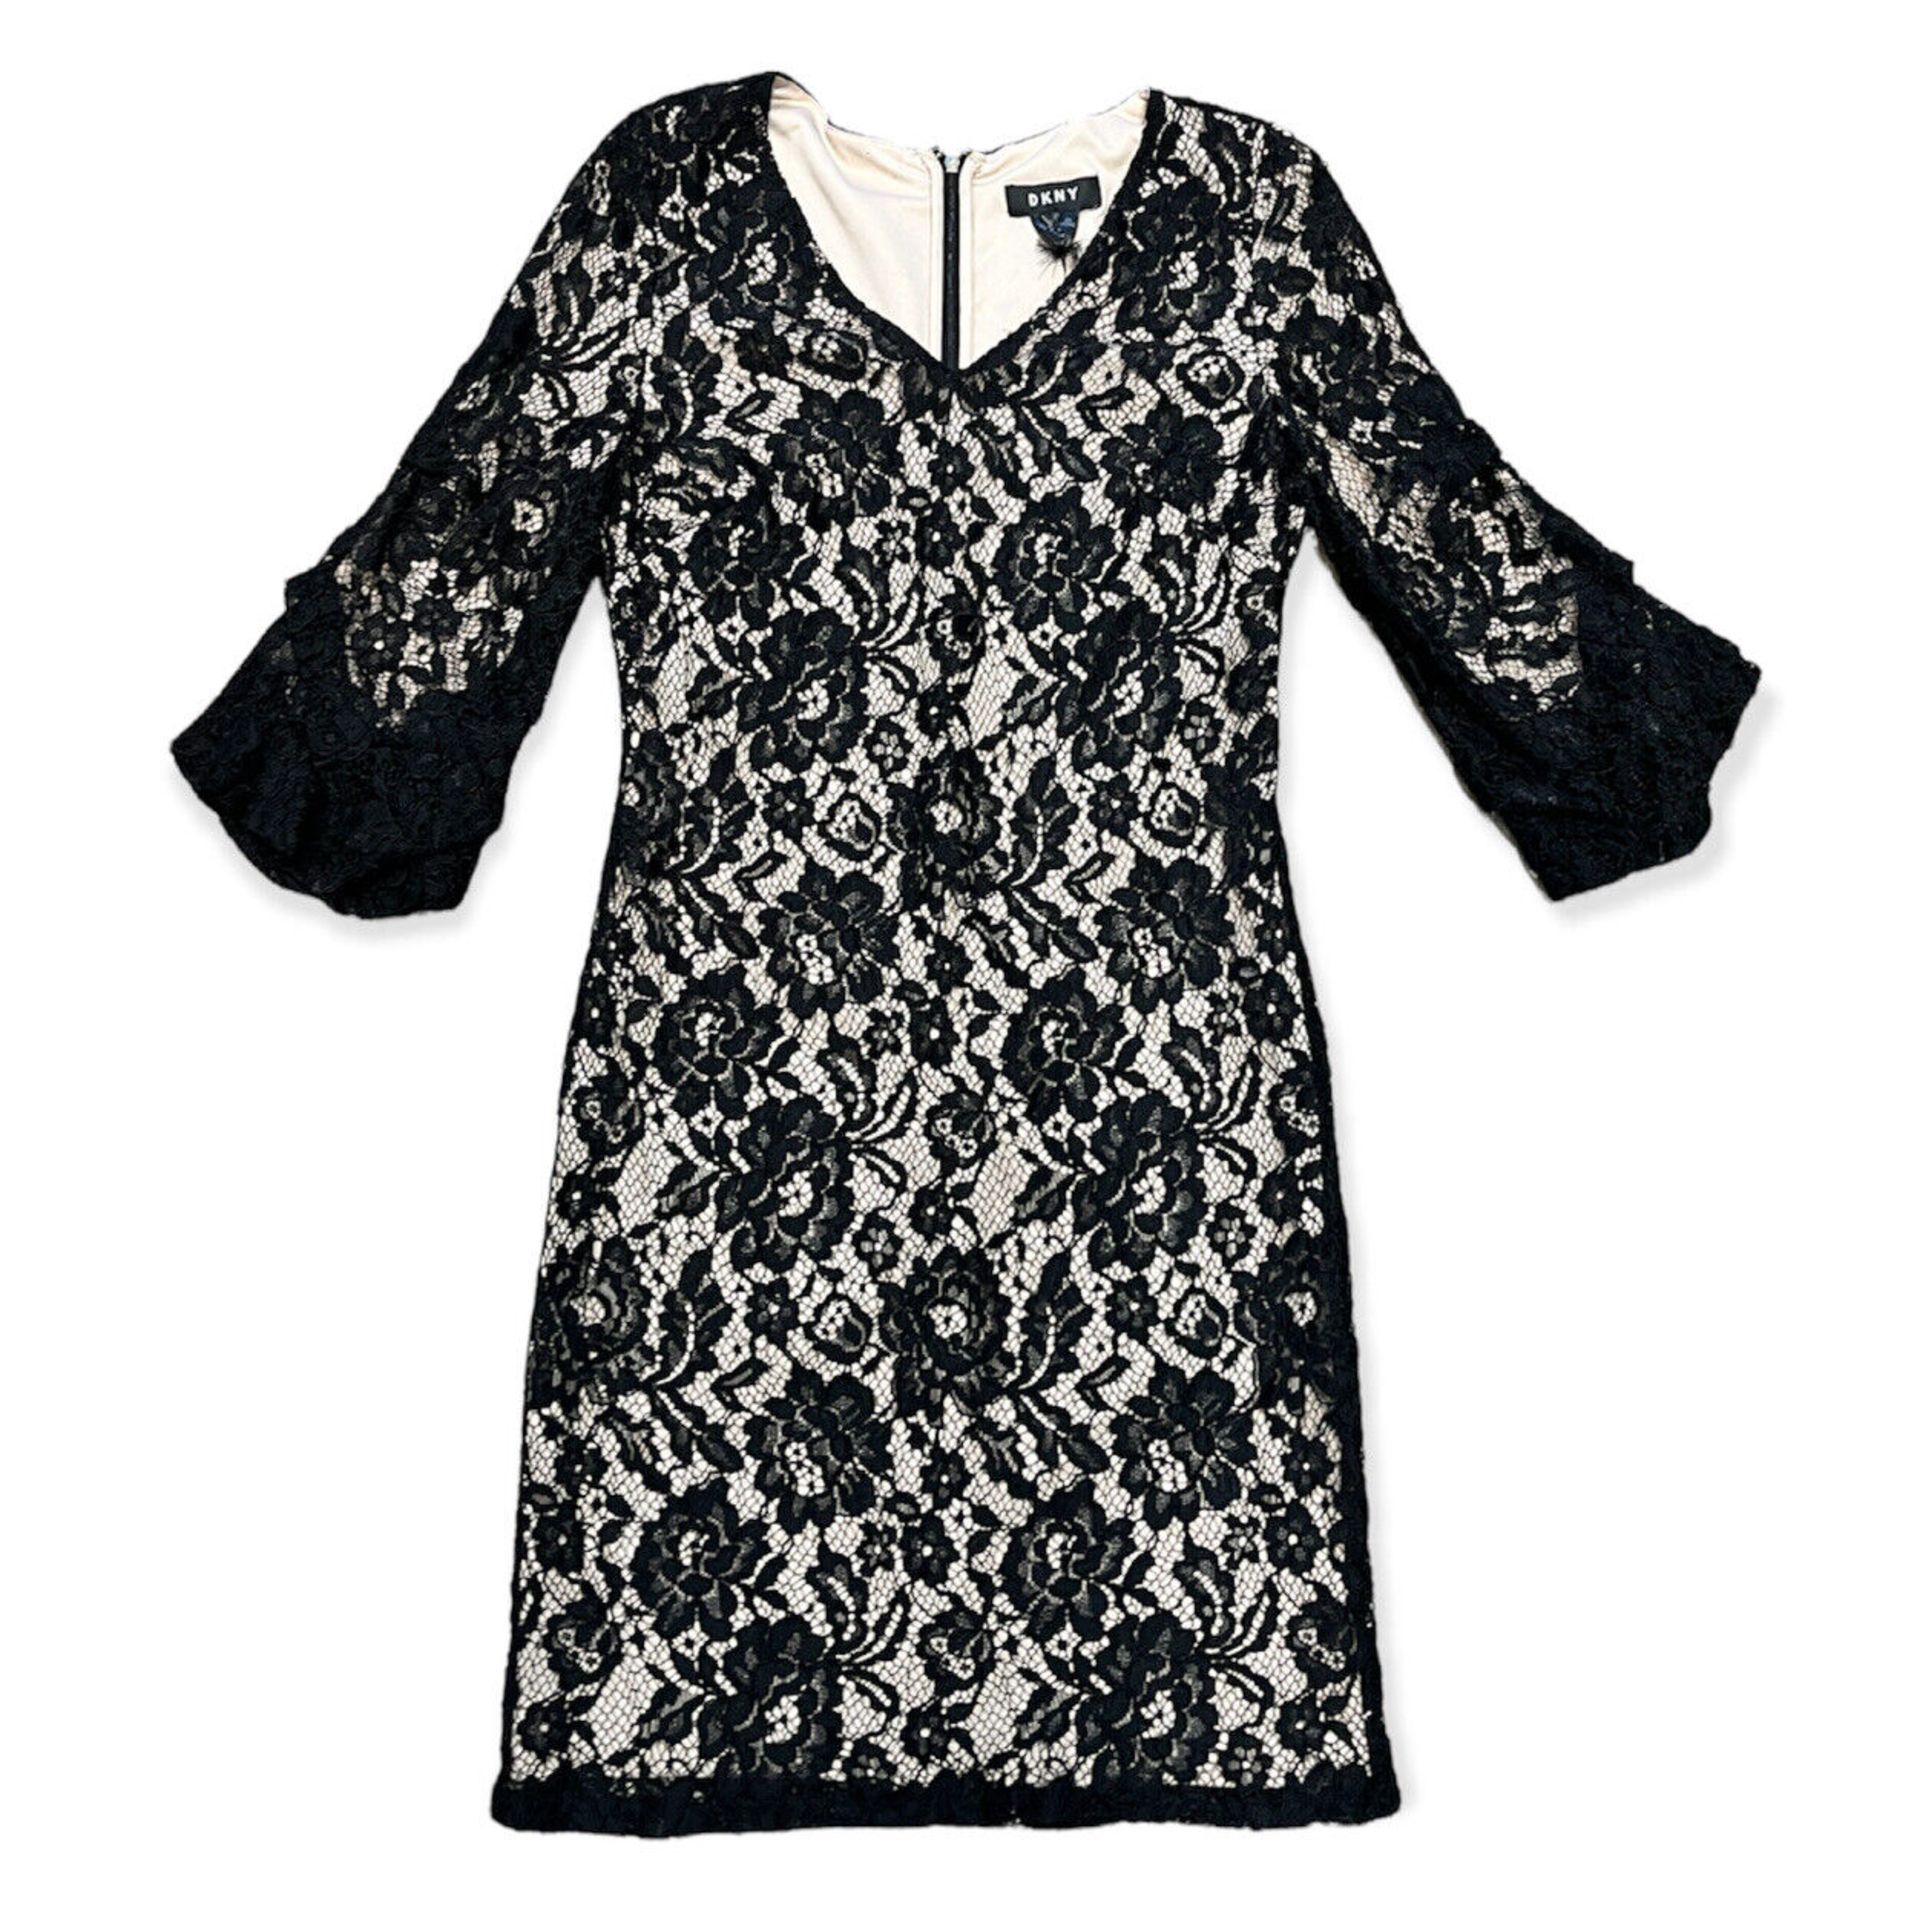 DKNY ladies black dress size 8 RRP £140